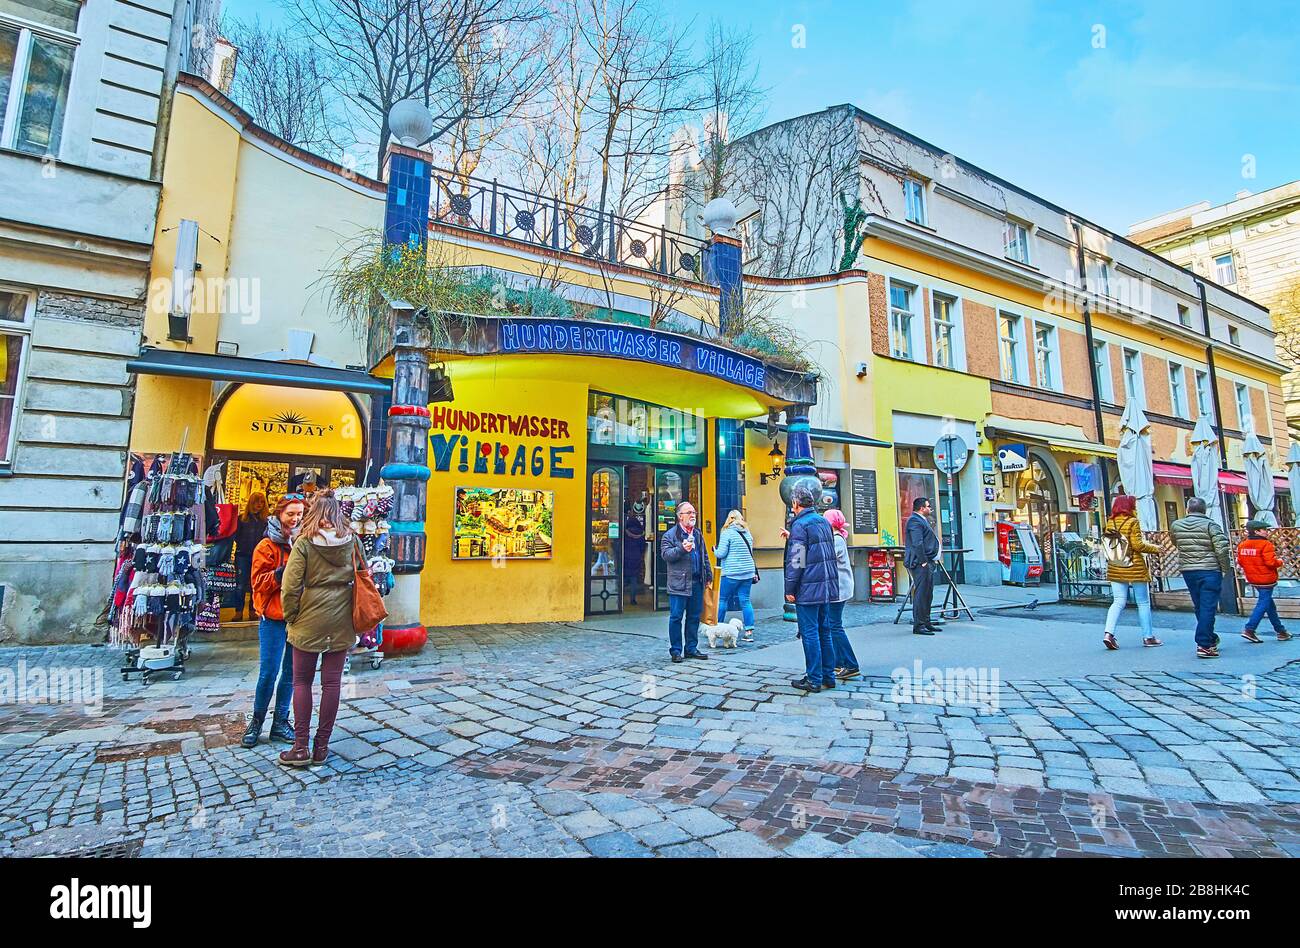 VIENNA, AUSTRIA - FEBRUARY 19, 2019: The entrance to Hundertwasser village handicraft market, popular among the tourists, on February 19 in Vienna Stock Photo